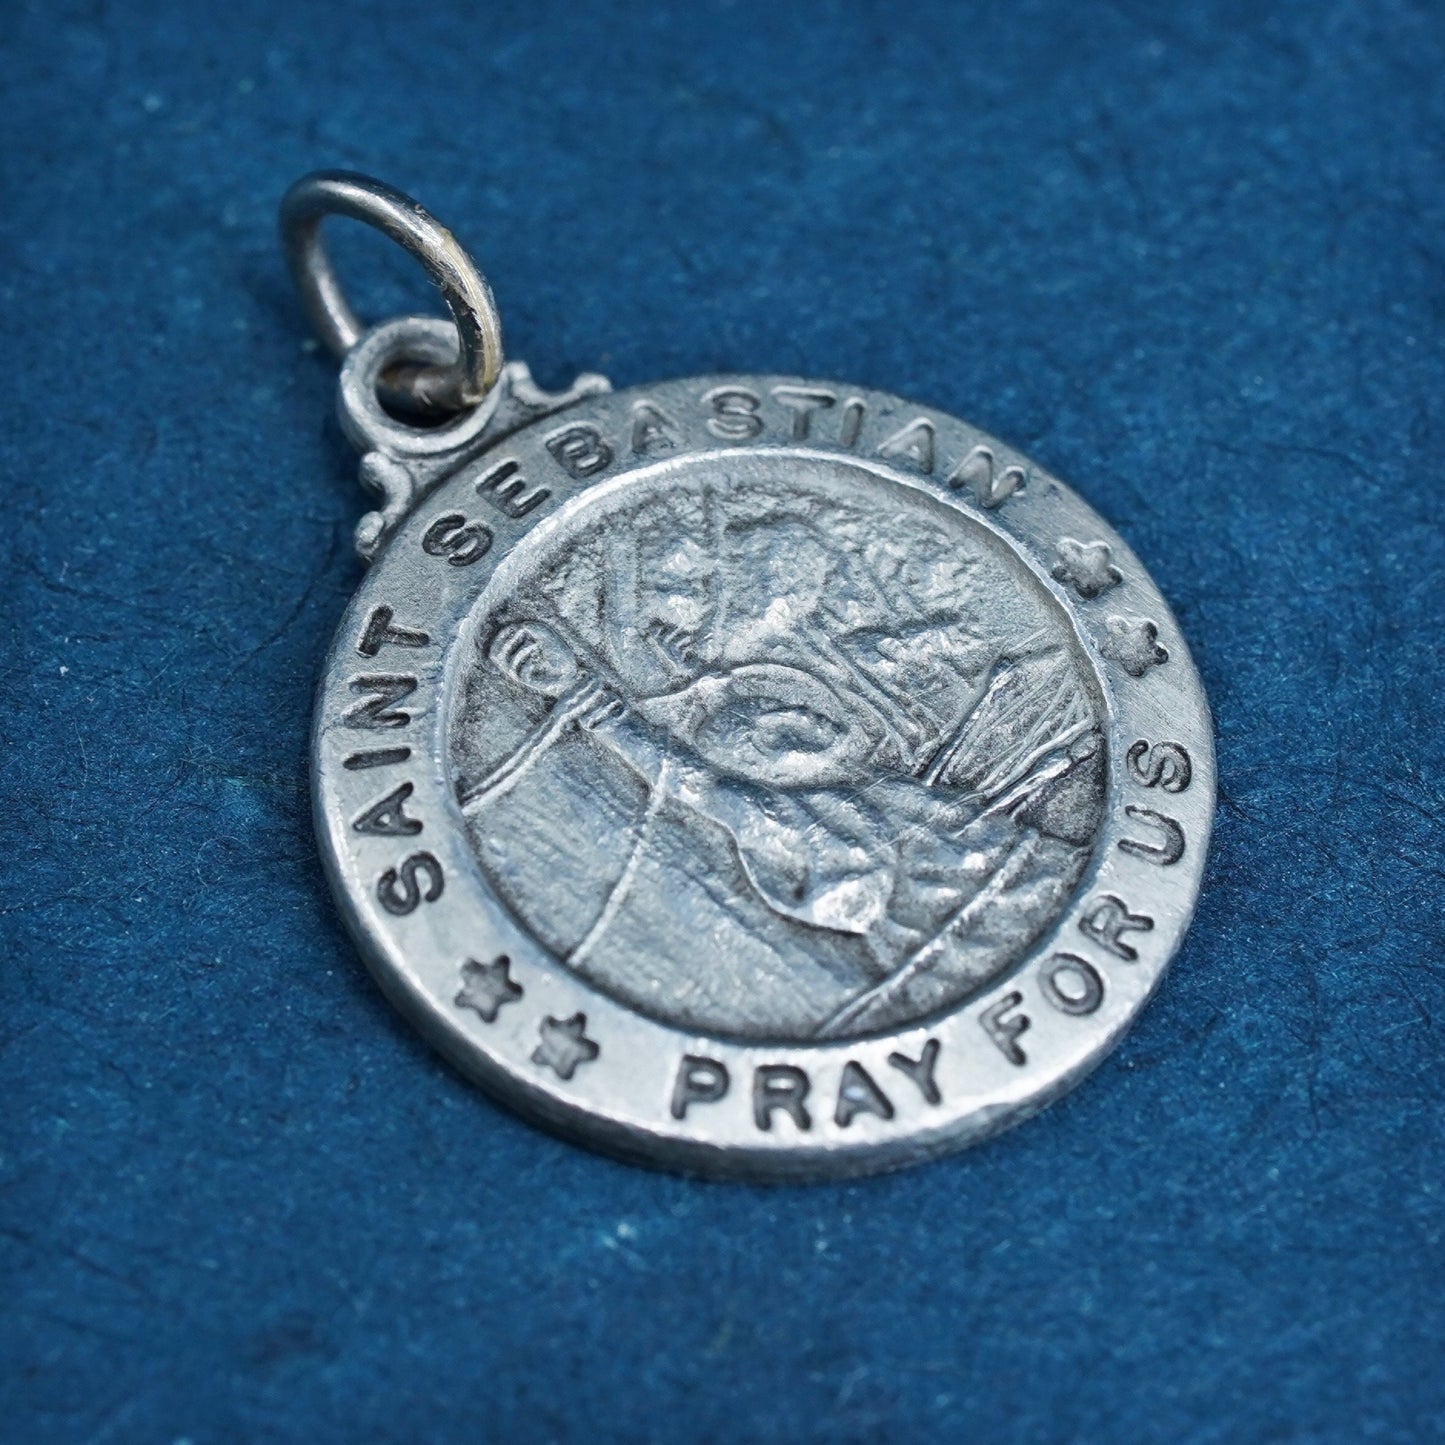 Vintage Pewter Marines pendant, tag charm engraves “saint Sebastian pray for us